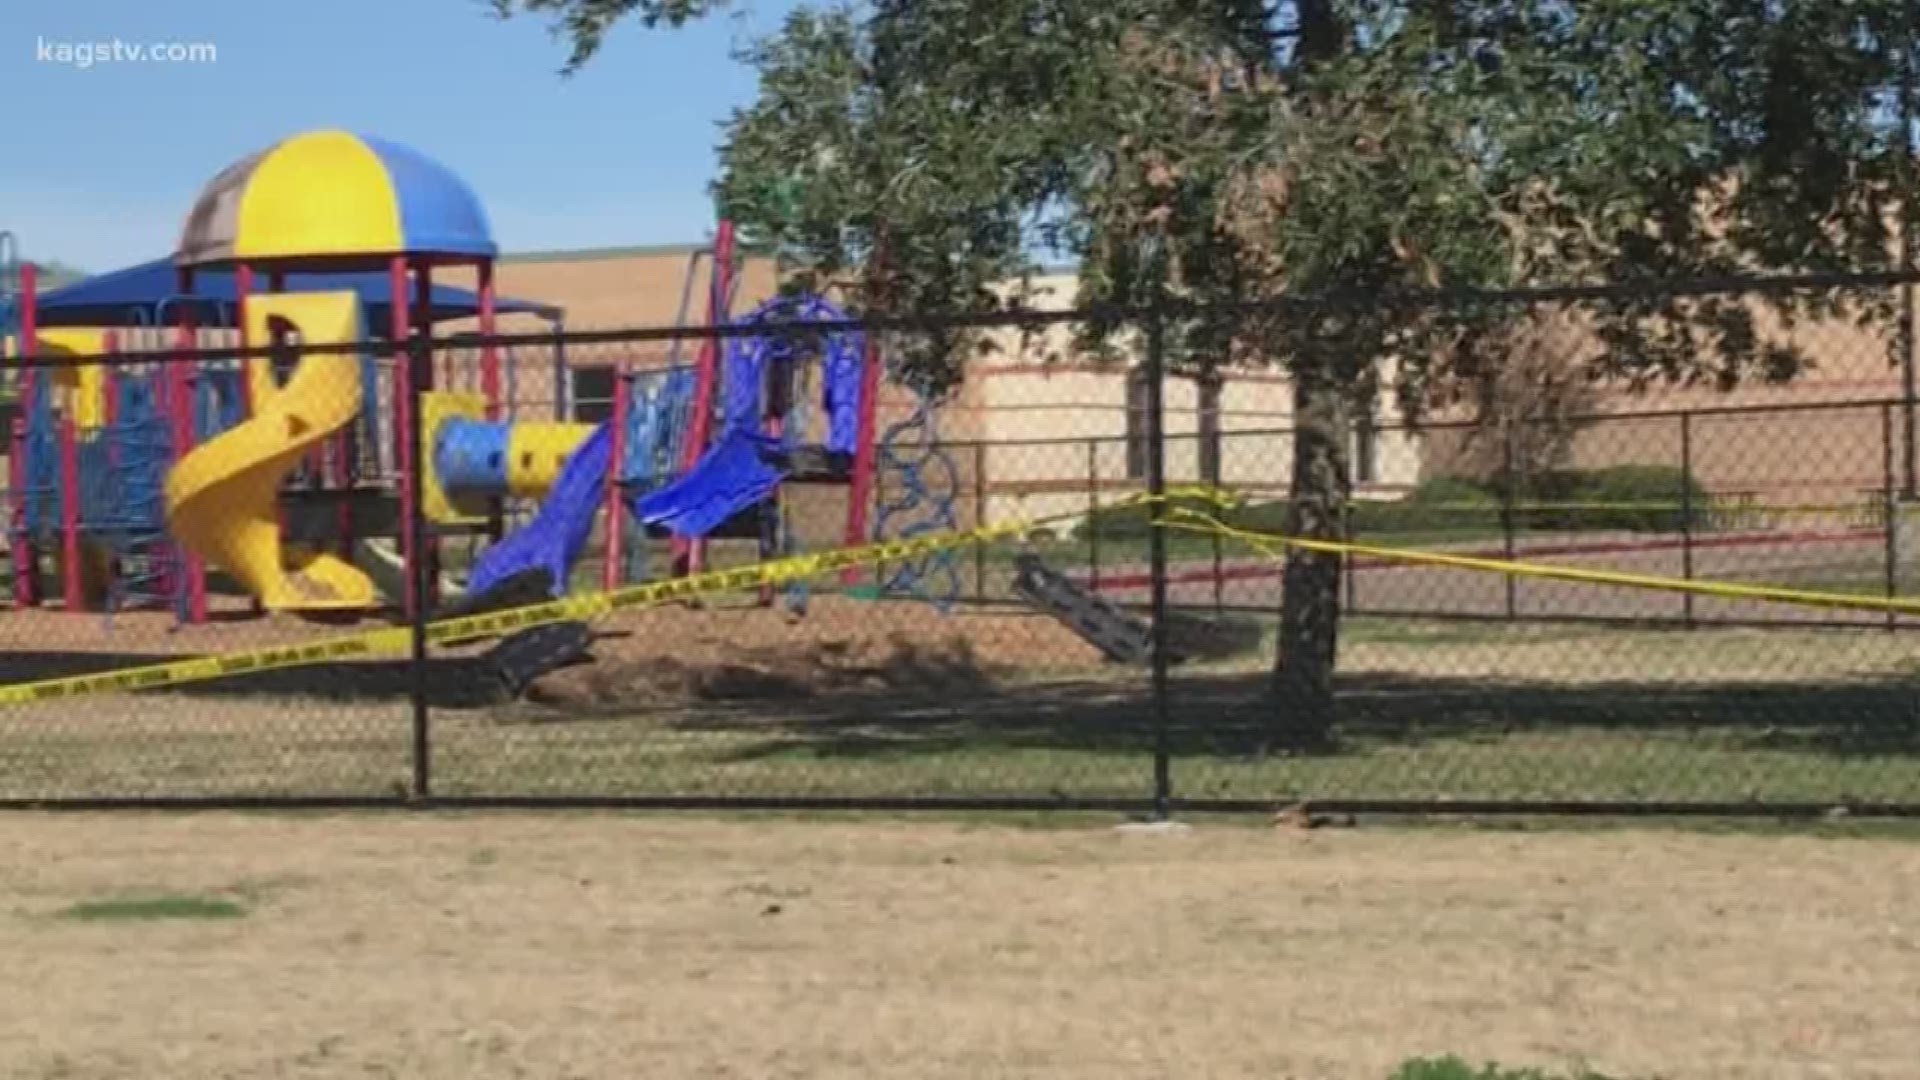 Playground damaged by suspected drunk driver